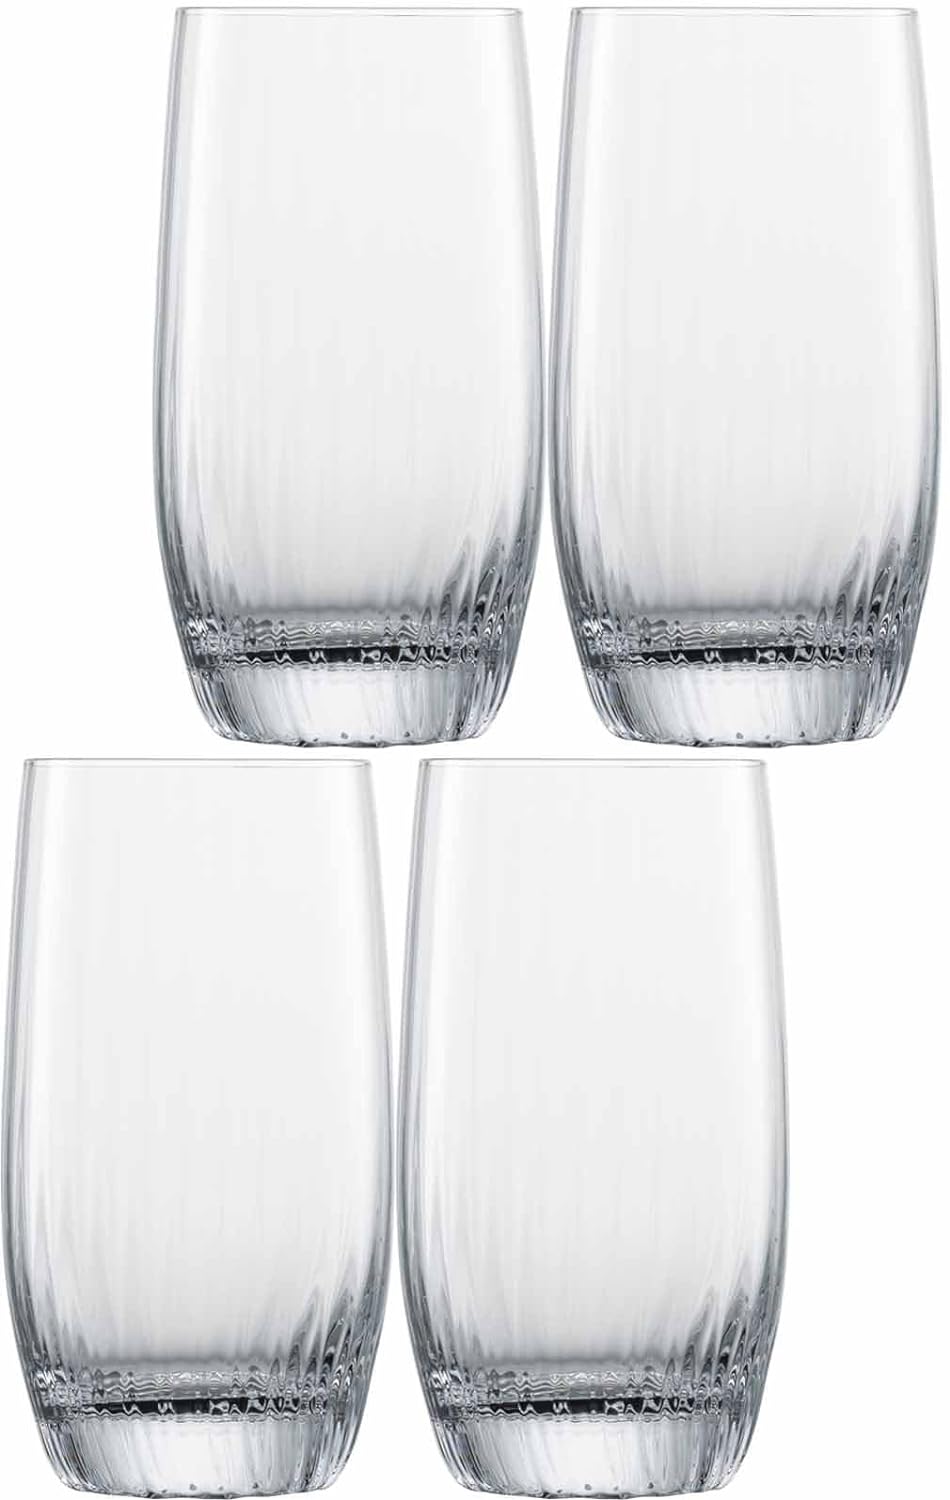 Zwiesel Glass All-Round Glass Fortune Set of 4 392 ml Tritan Glass, Dishwasher Safe, Shatterproof